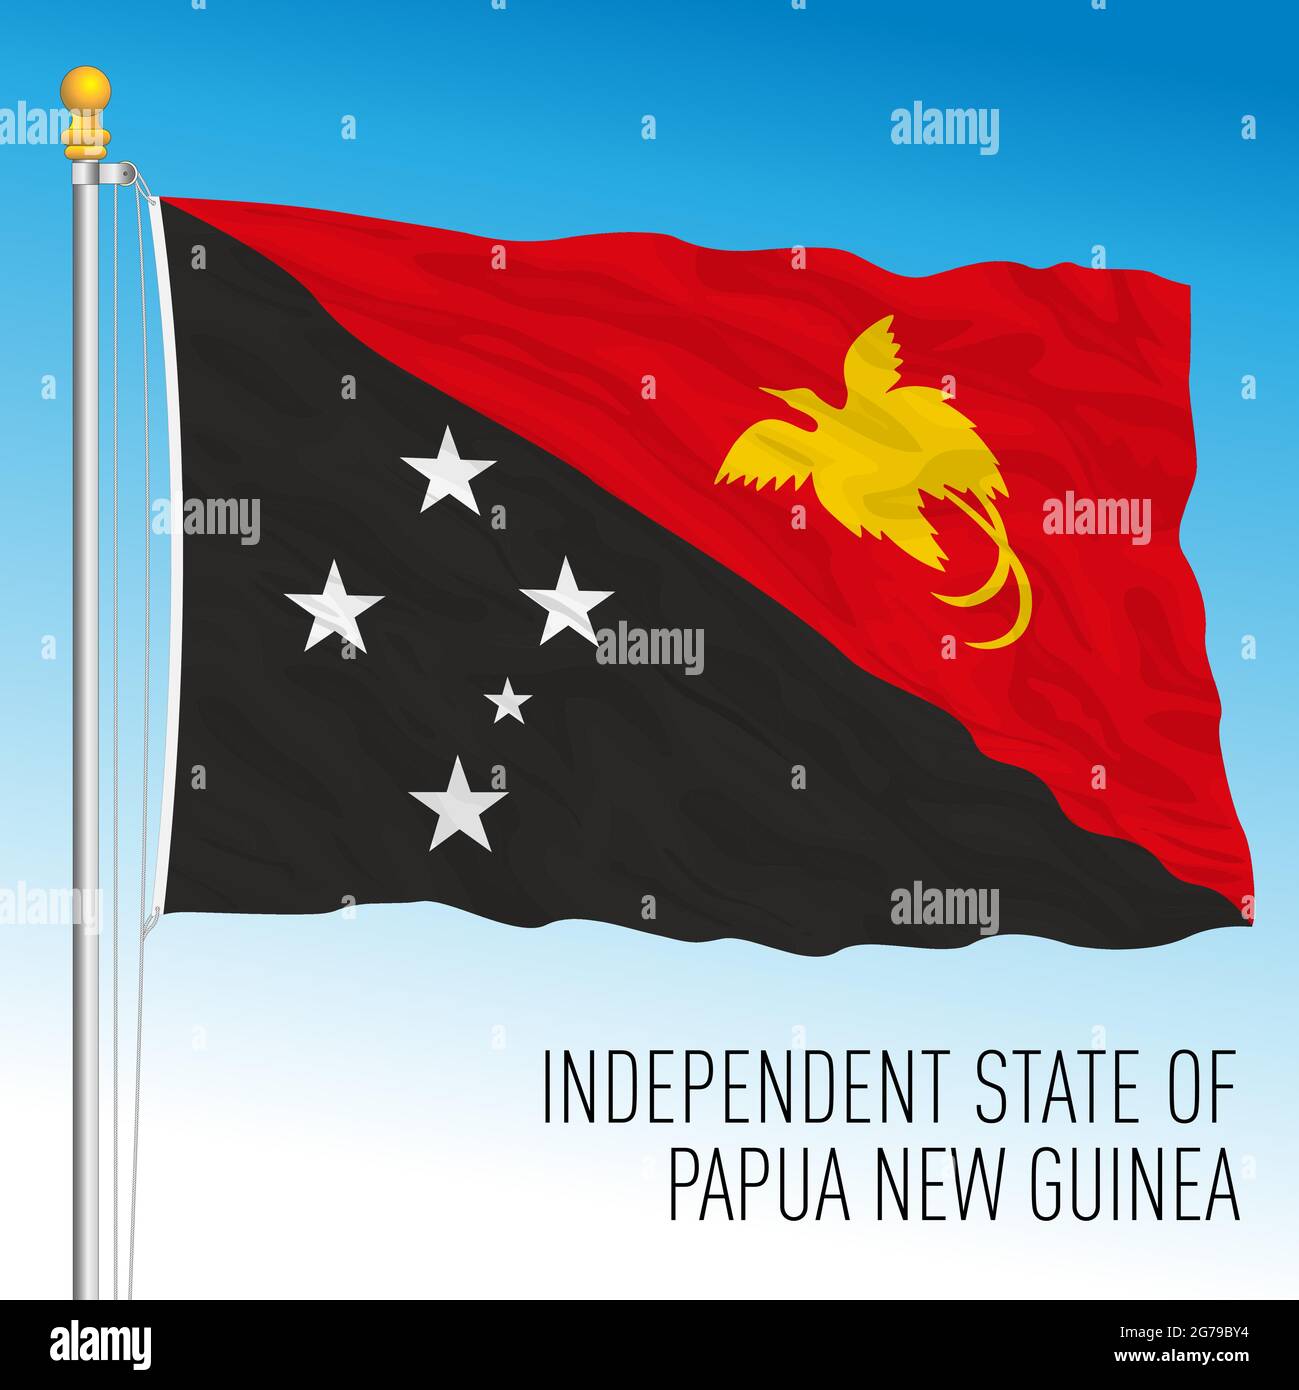 Papua-Neuguinea offizielle Nationalflagge, ozeanien, Vektorgrafik Stock Vektor